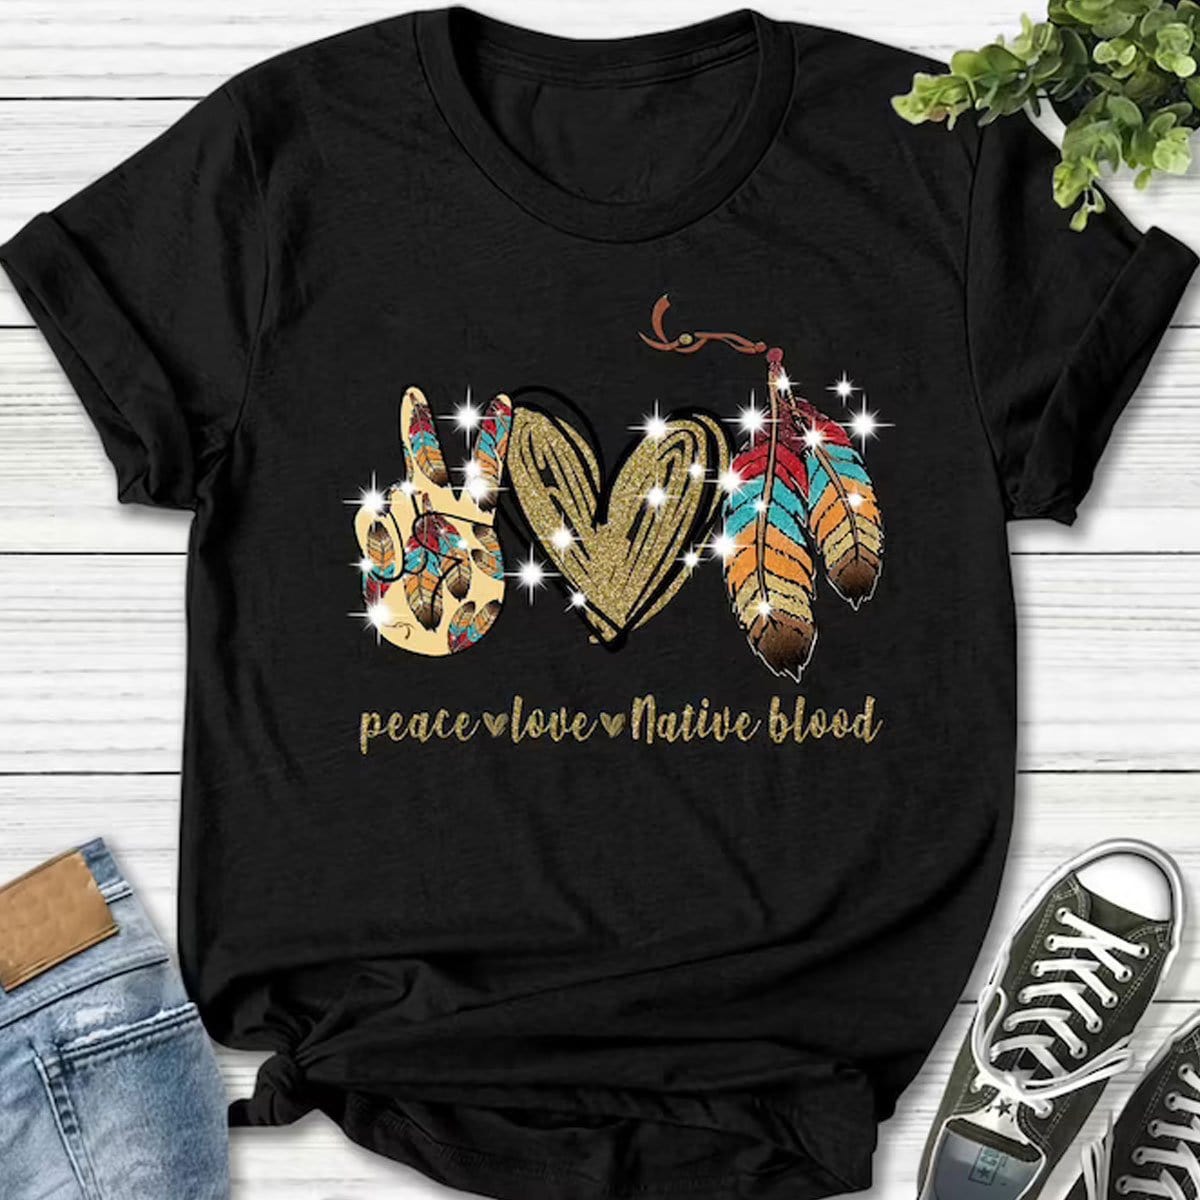 Peace Love Native Blood, Native American Shirts